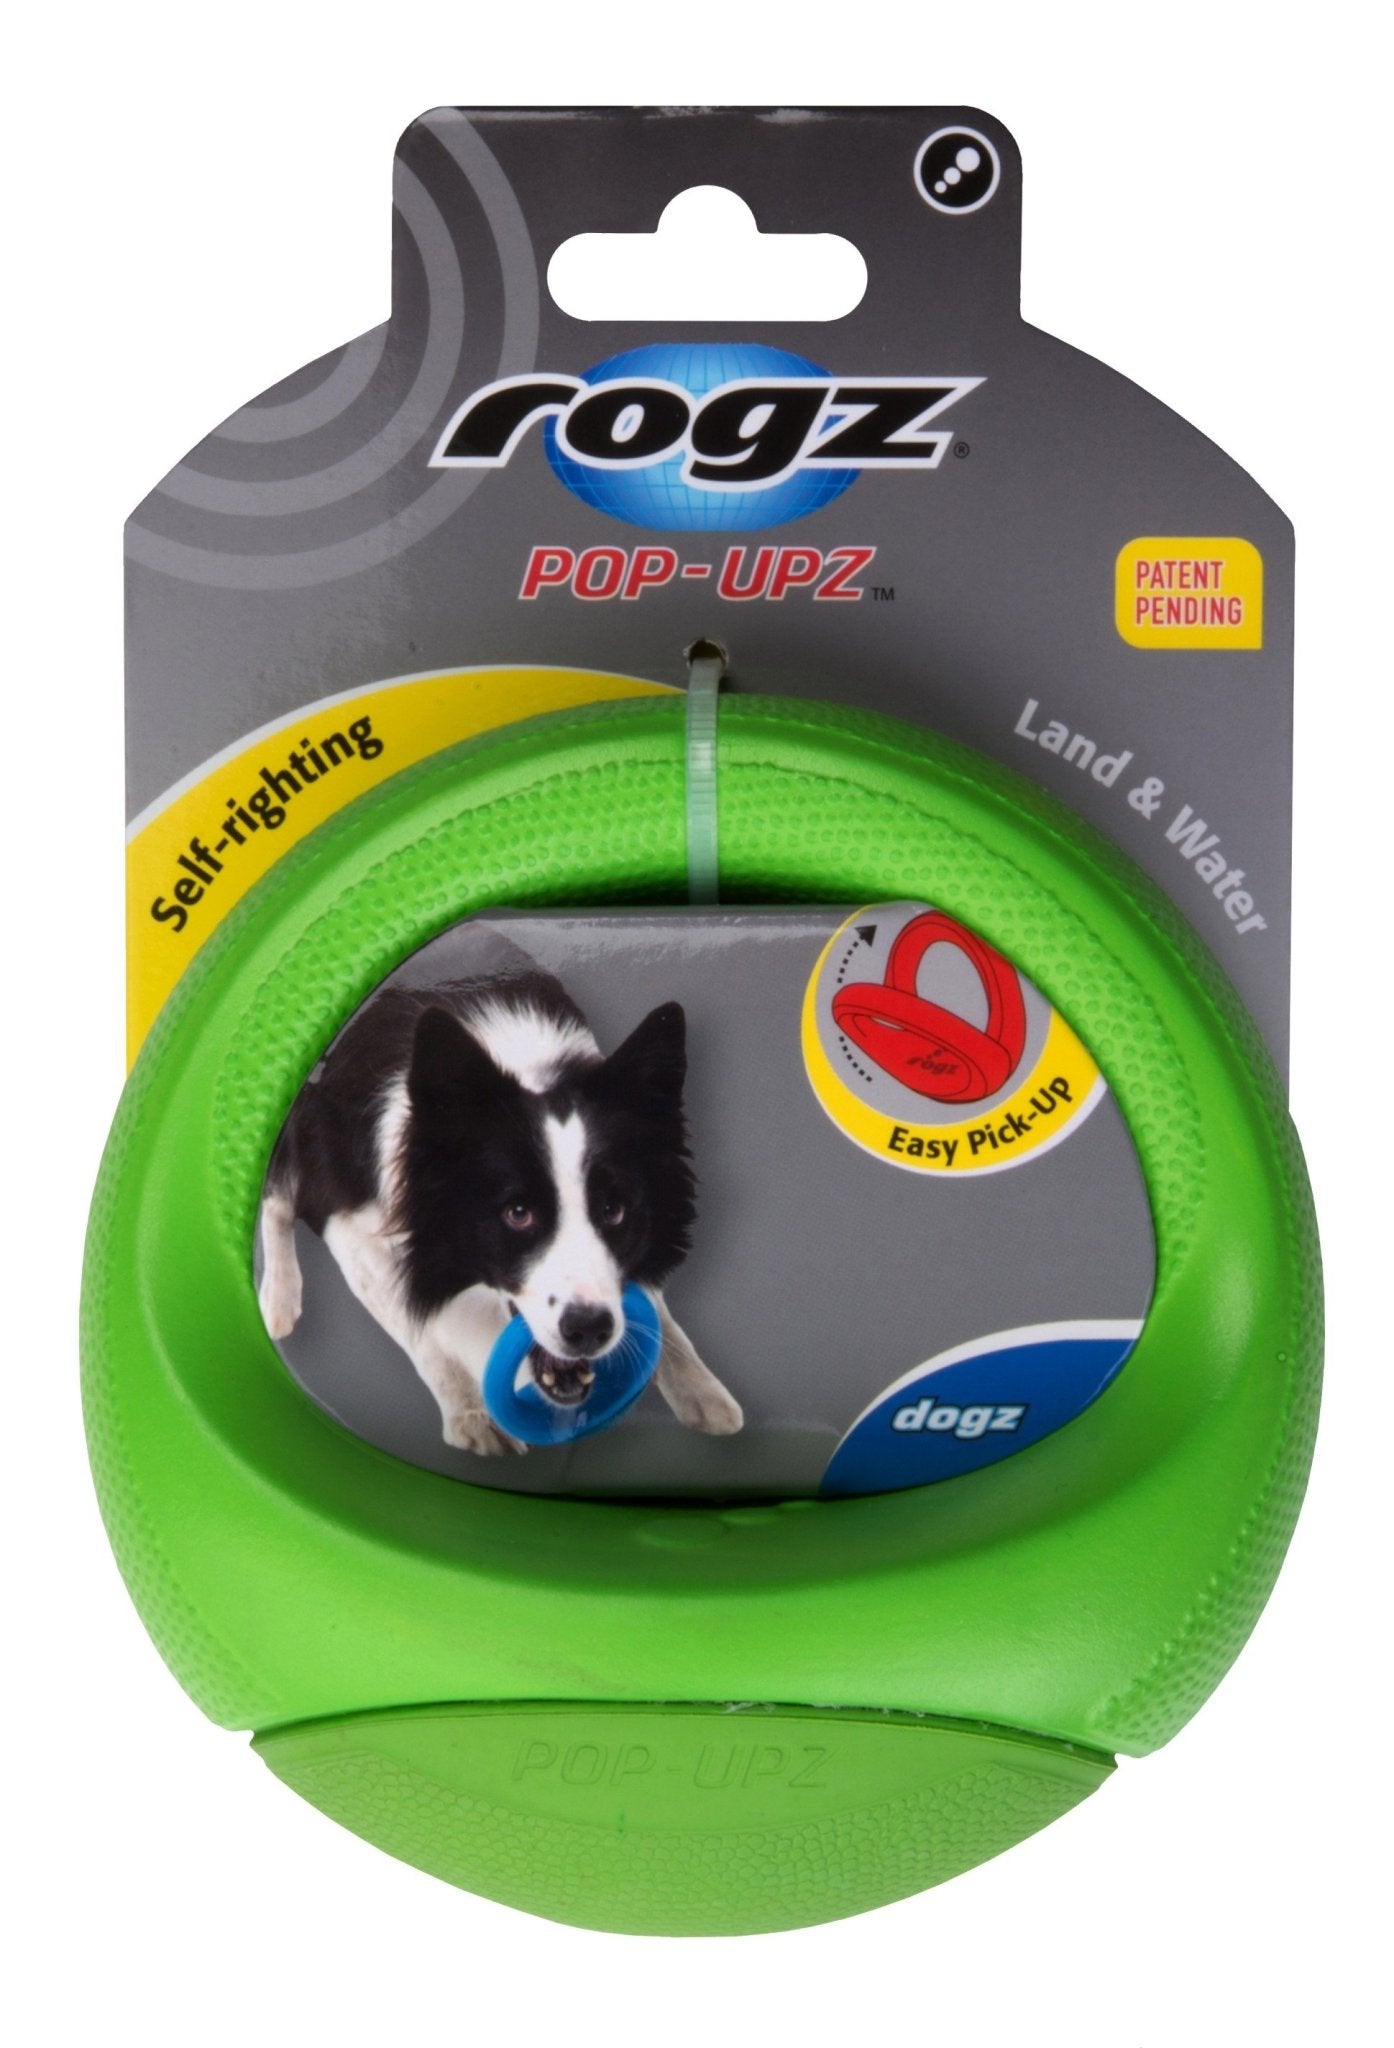 Rogz Dog Pop-Upz Self-Righting Float and Fetch Toy - Fetch Toys